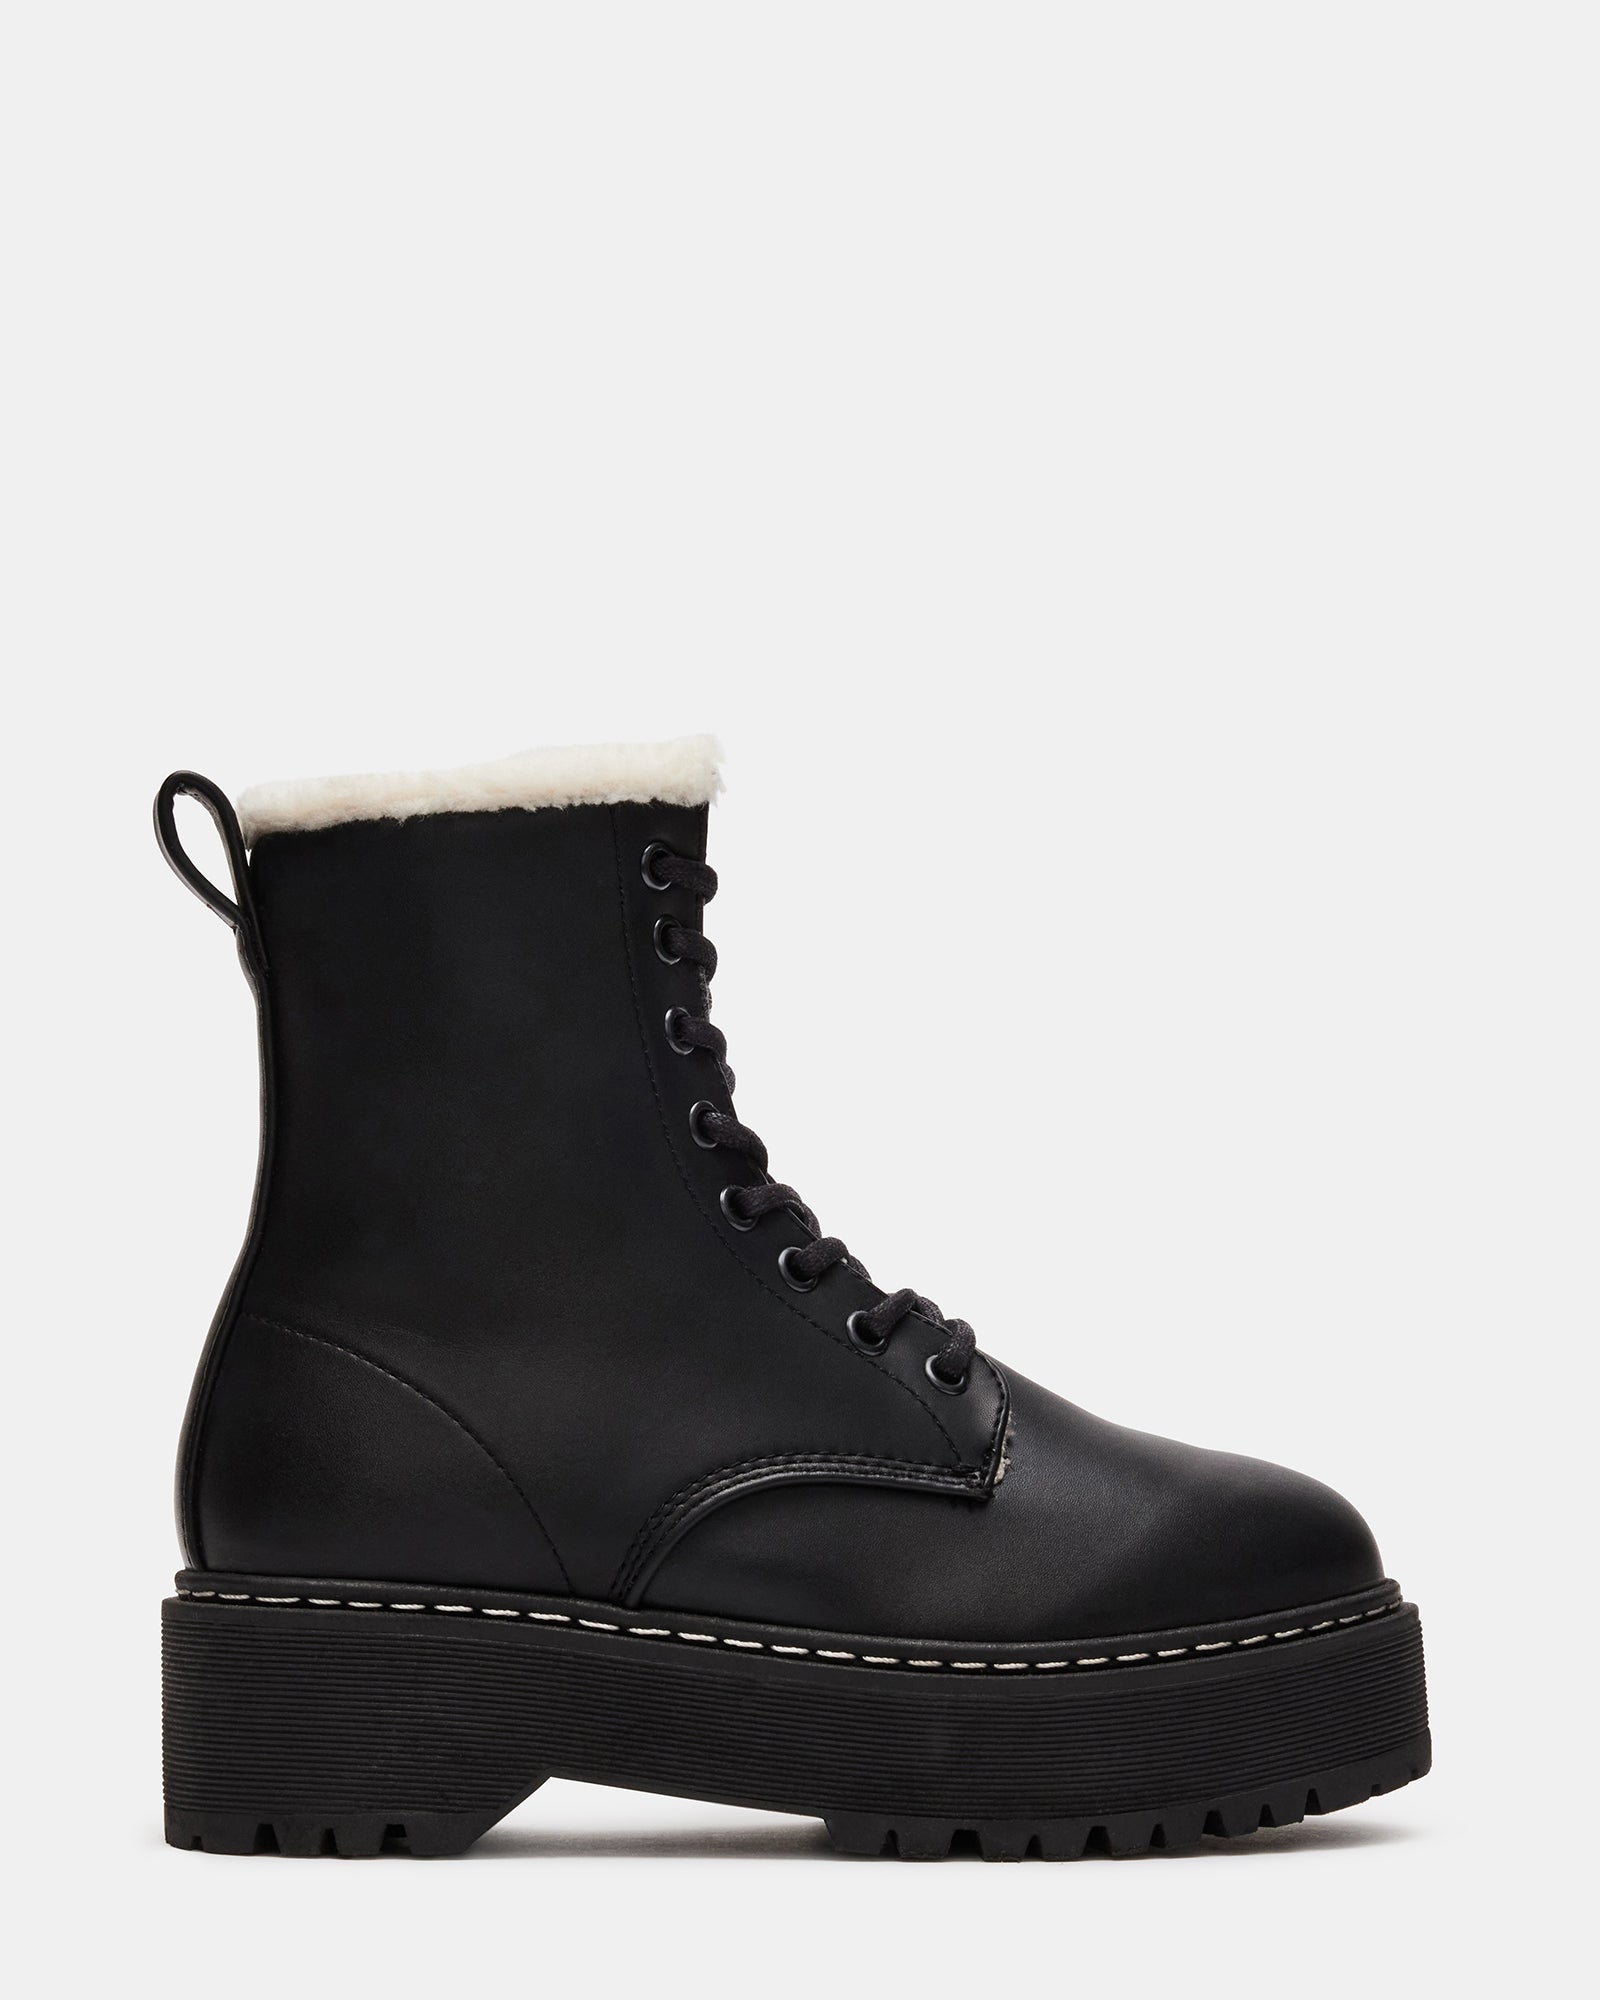 JEALOUS BLACK Heeled Boots, Buy Women's BOOTS Online